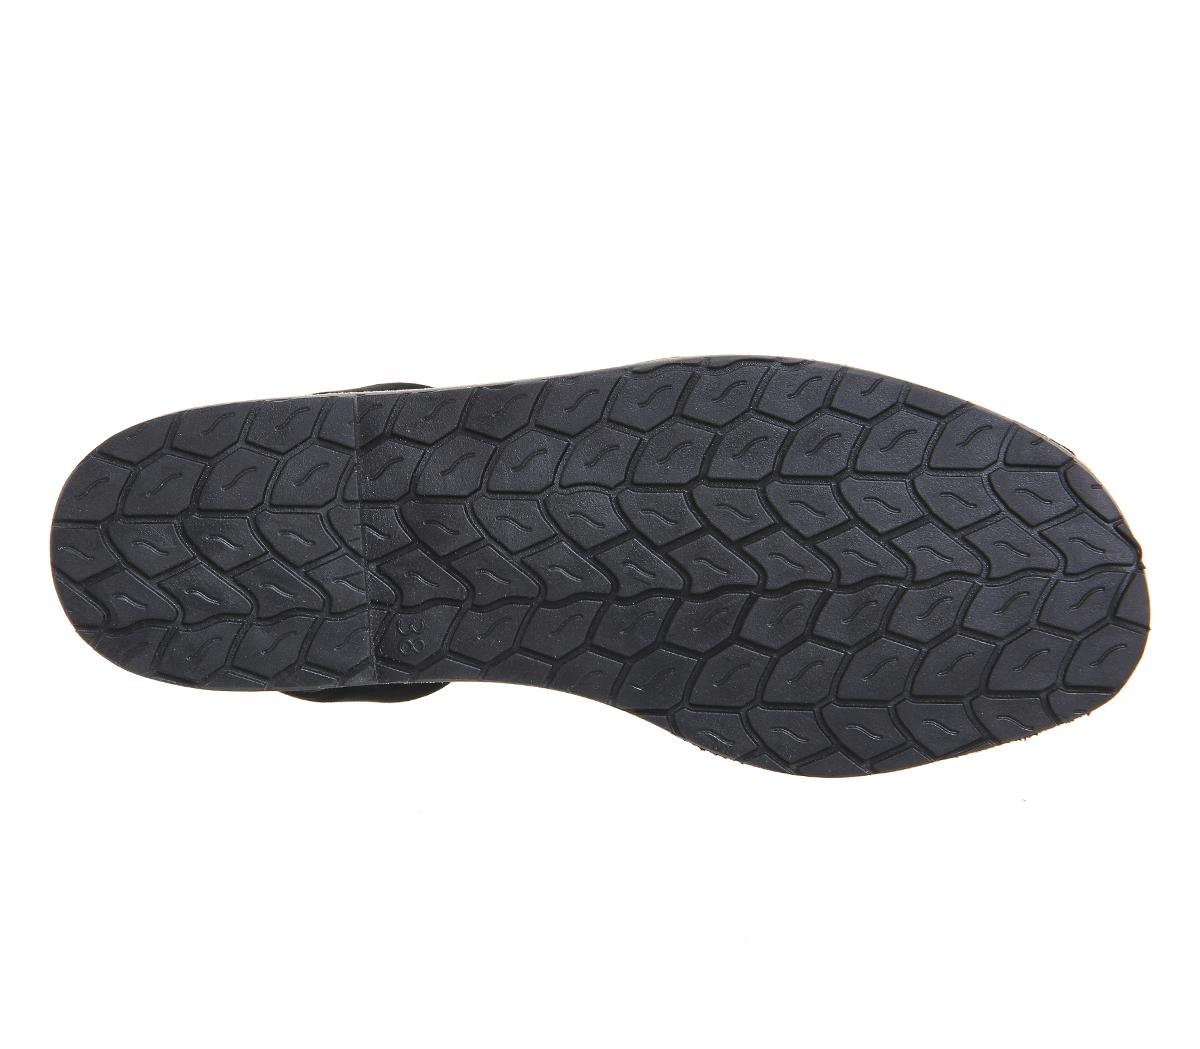 Solillas Solillas Sandals Black Leather - Sandals